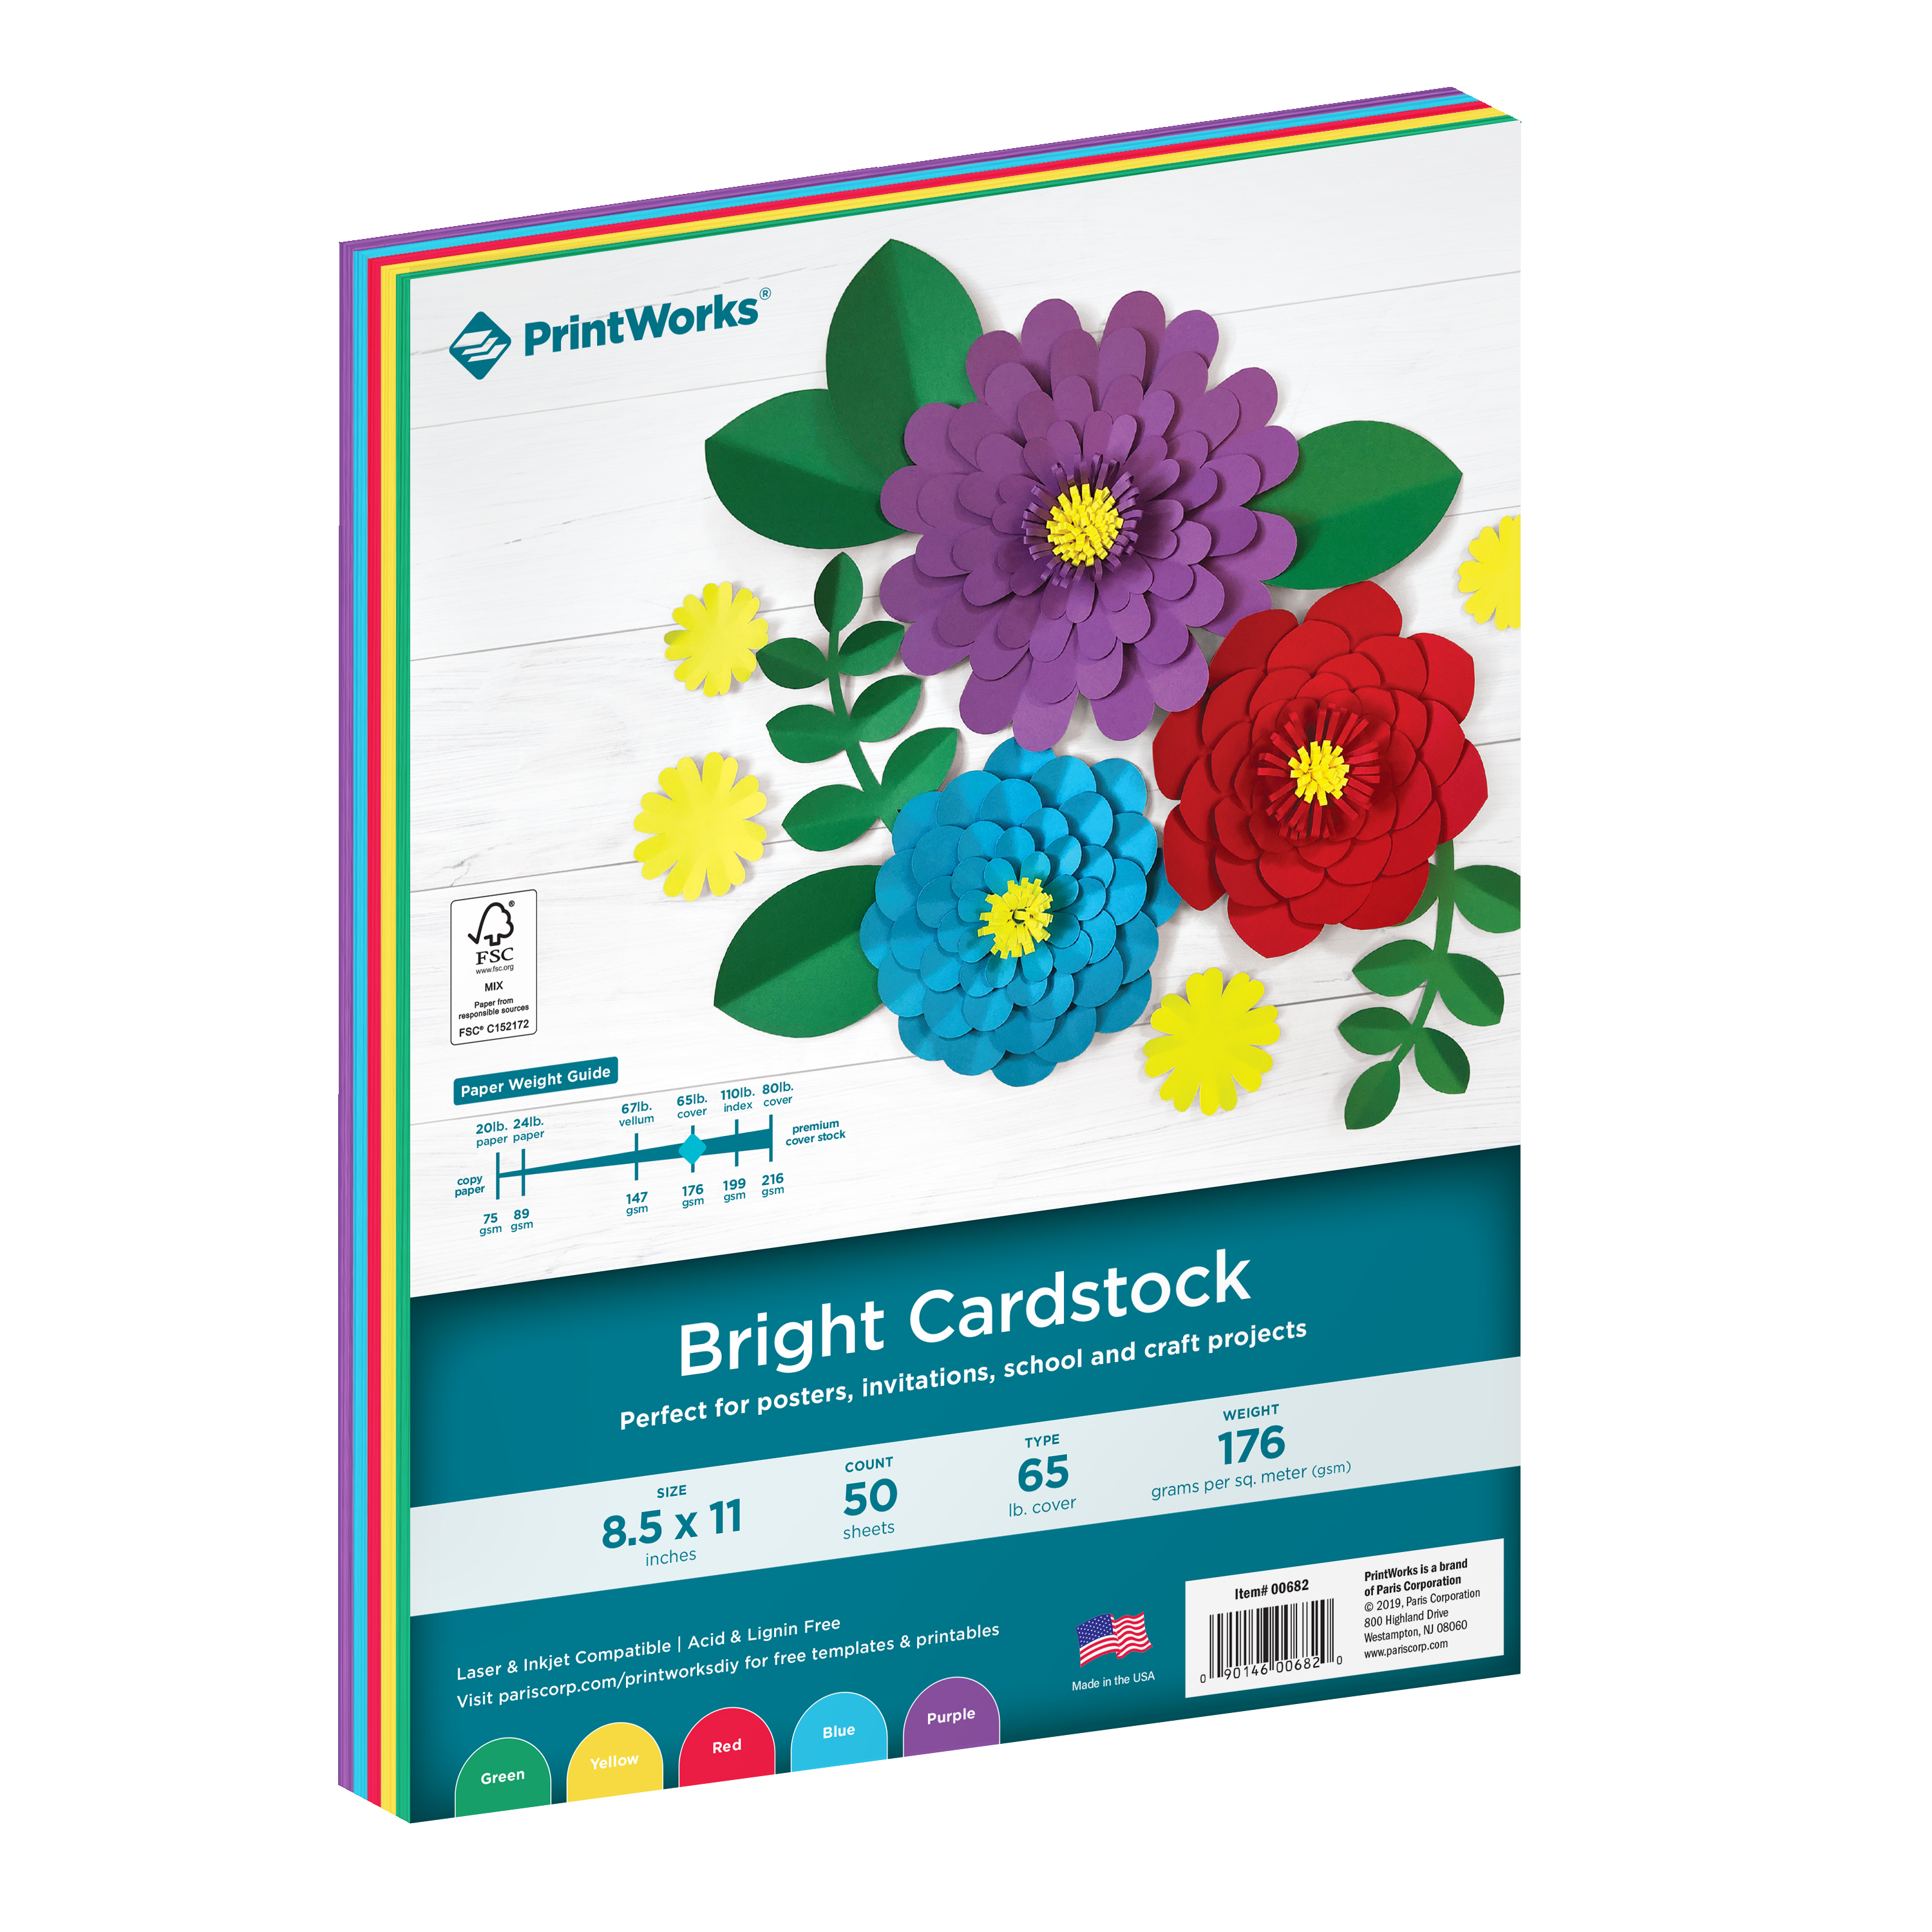 PrintWorks Bright Cardstock